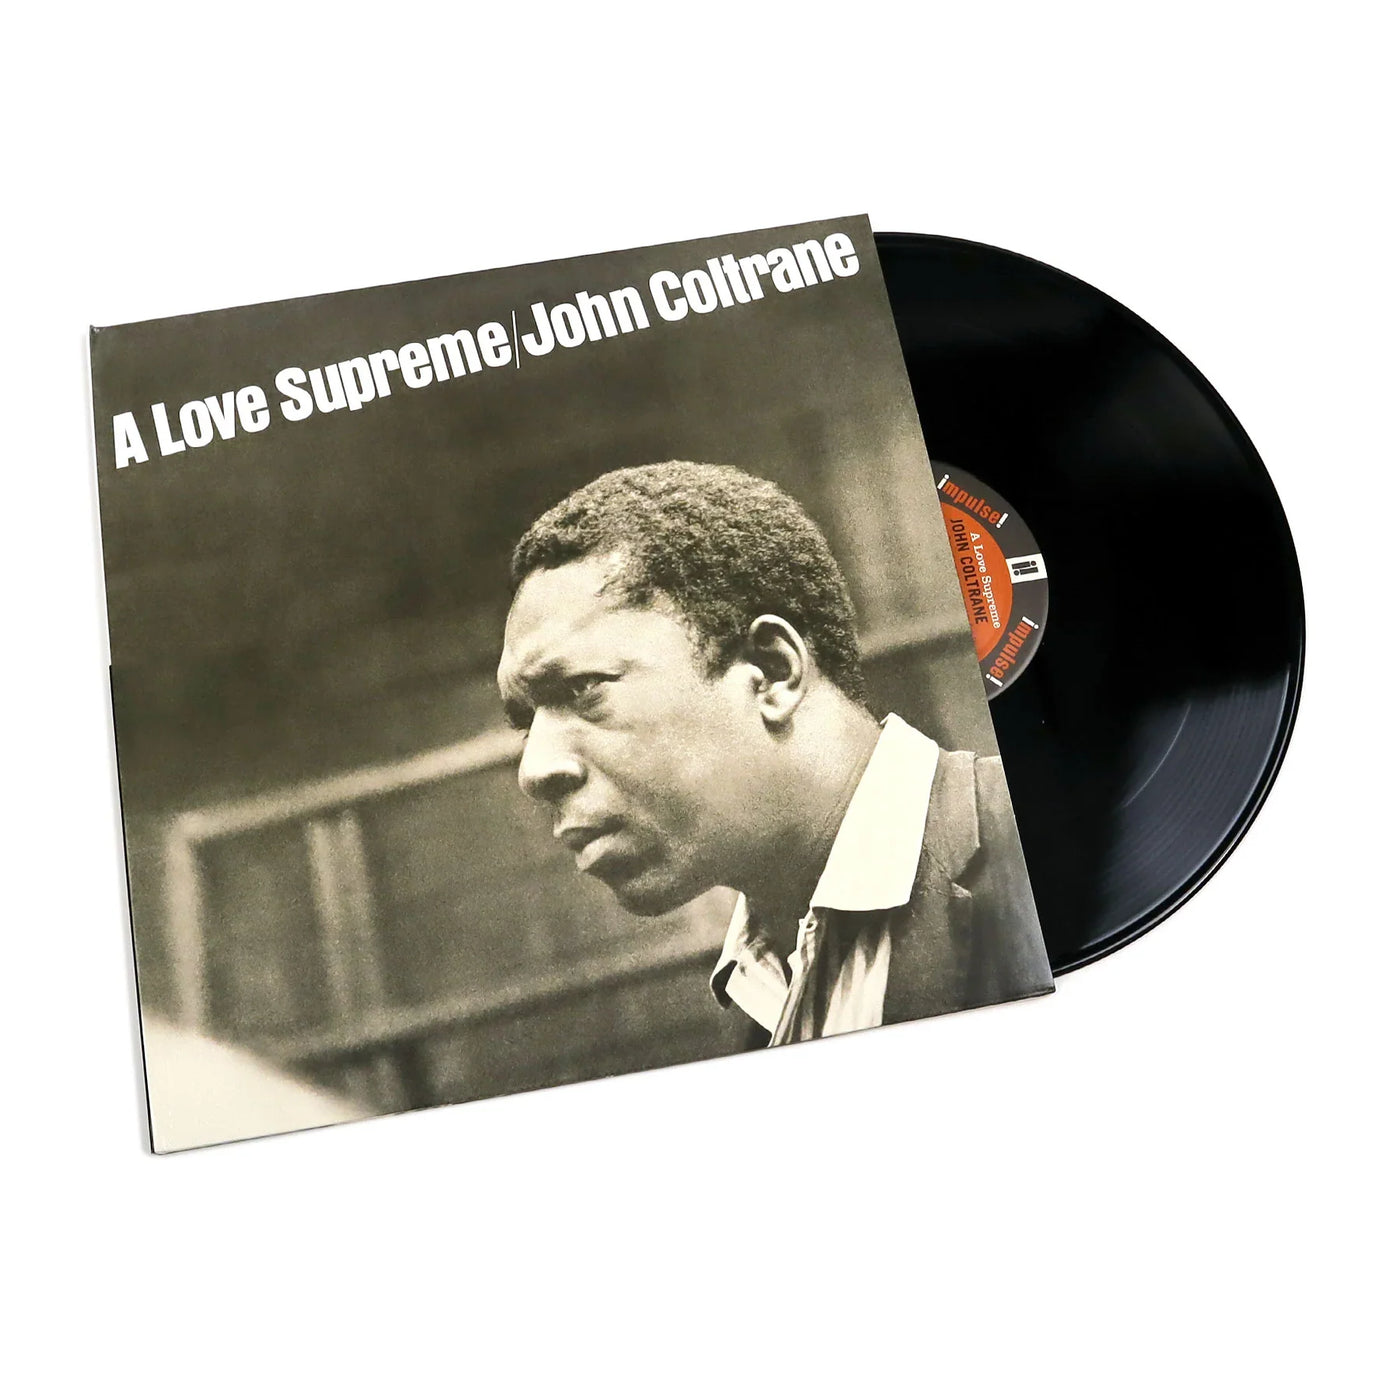 NEW/SEALED! John Coltrane - A Love Supreme